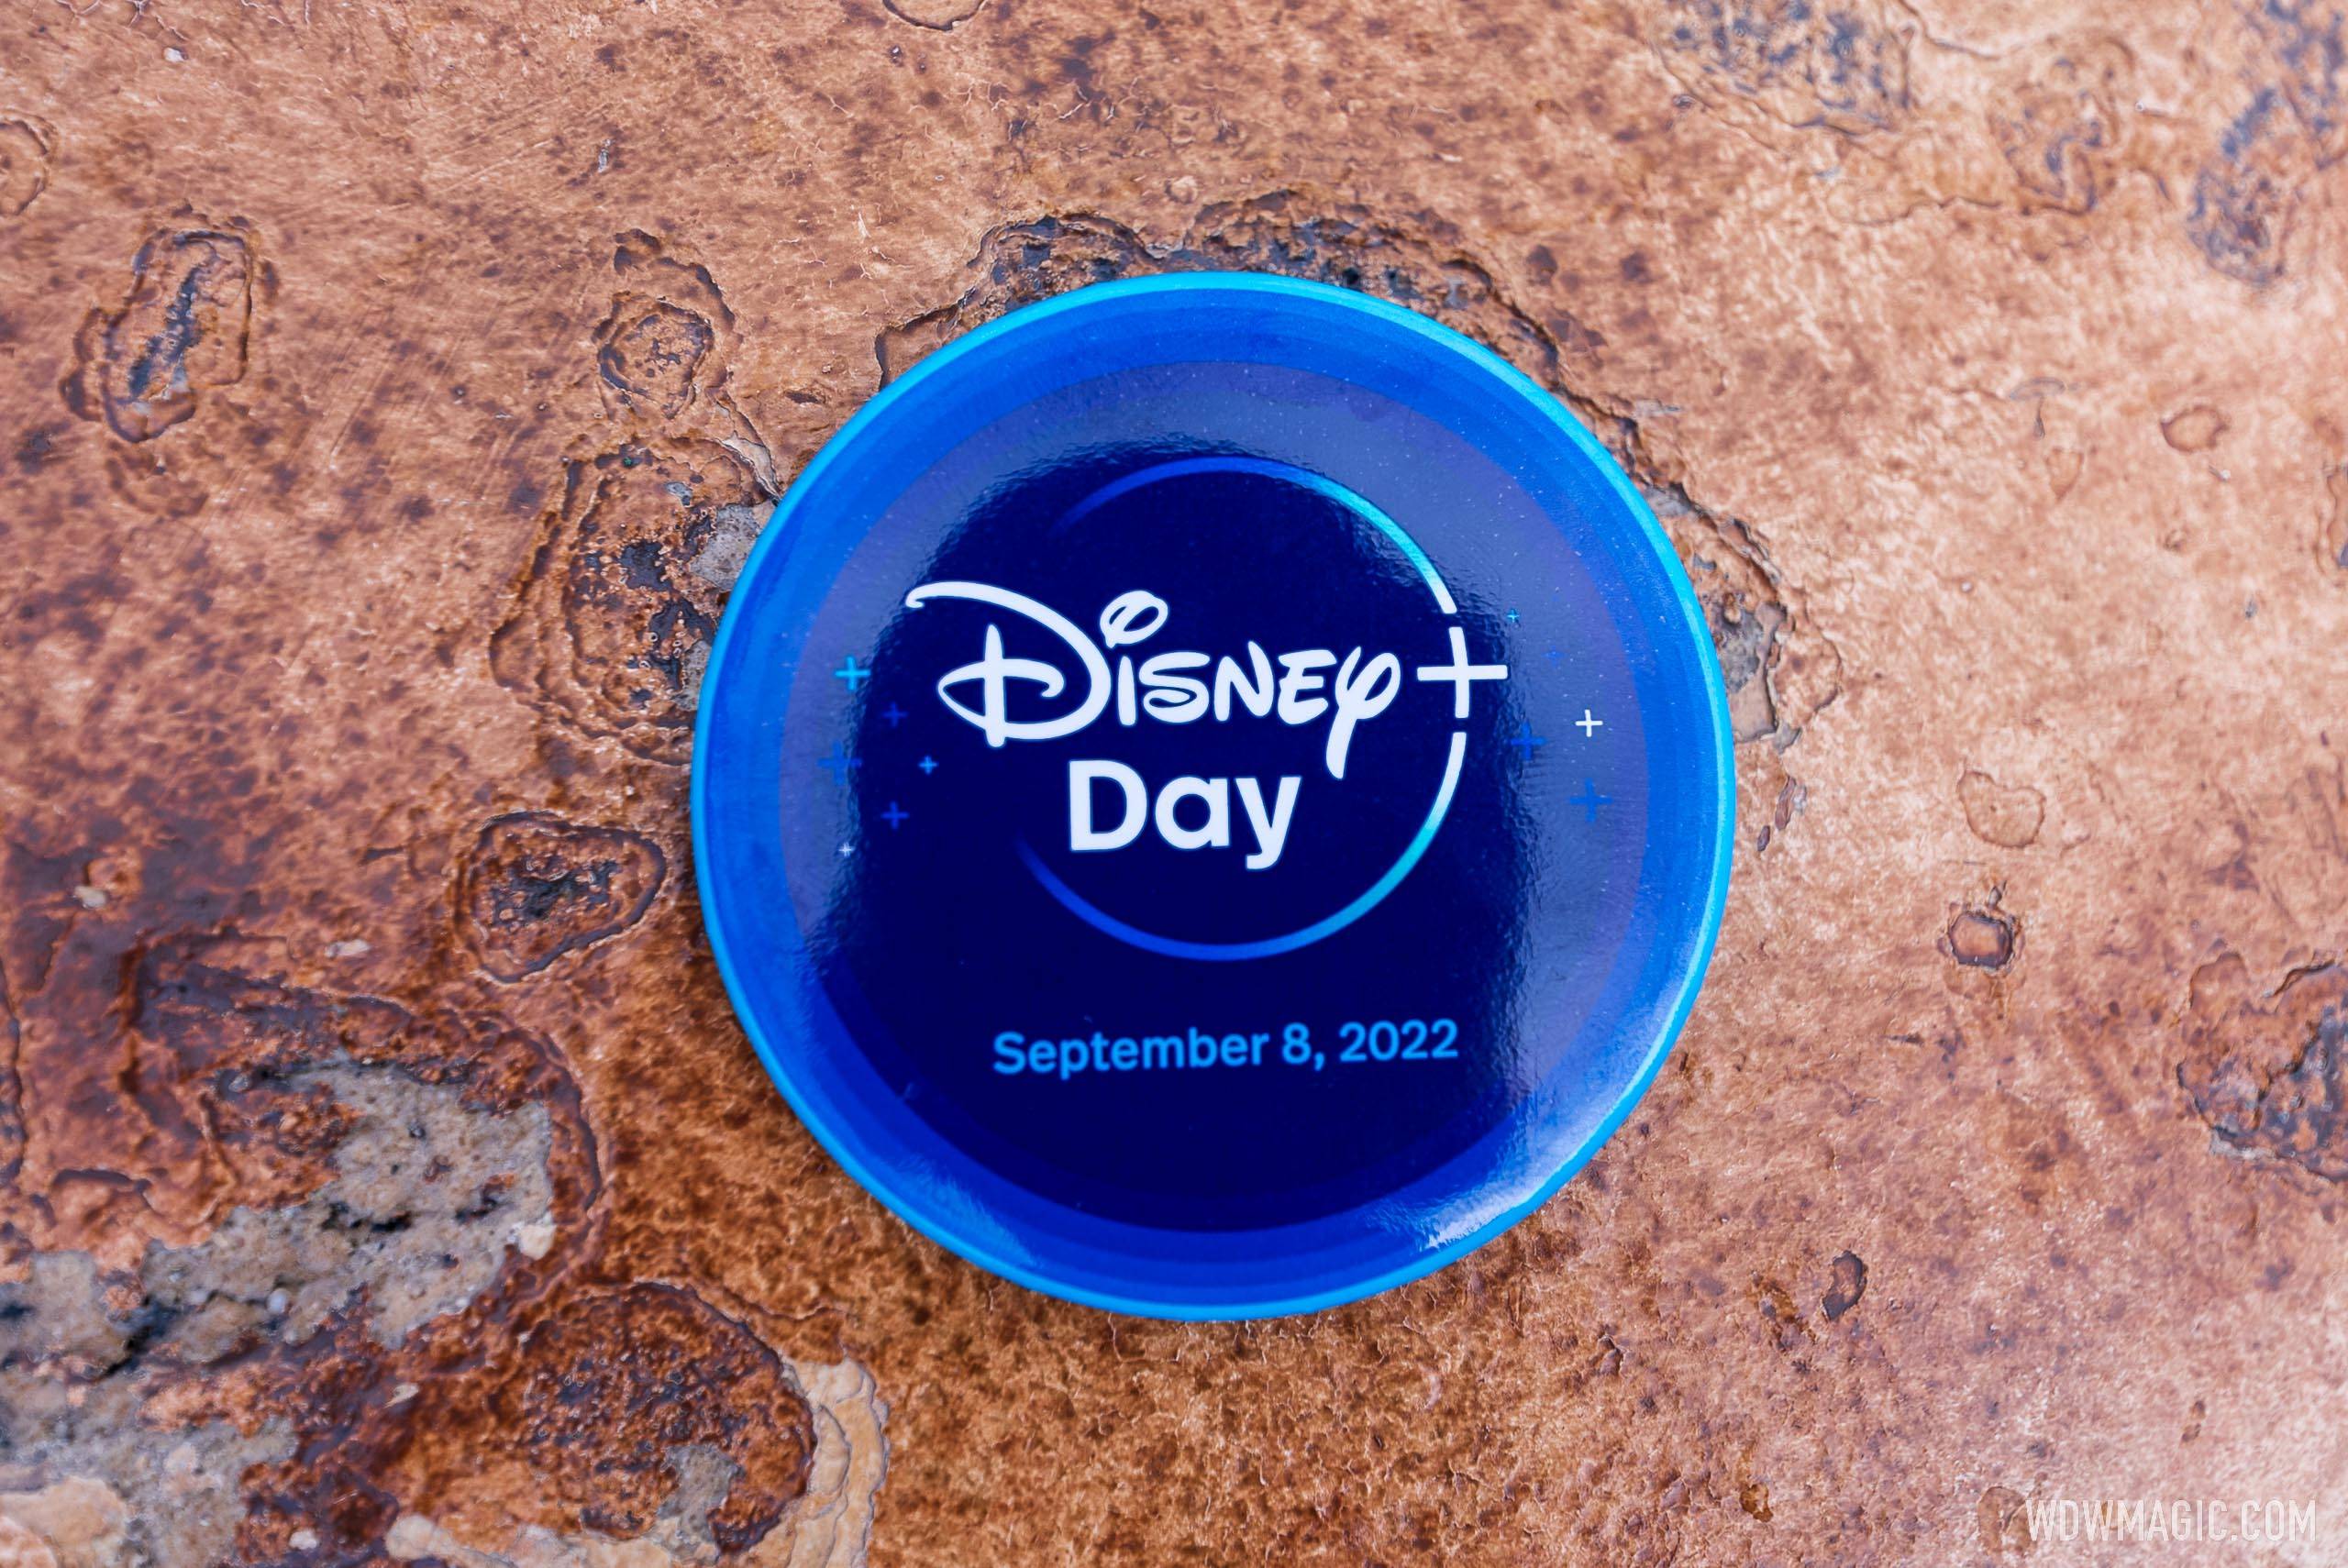 Disney+ Day 2022 at Disney's Hollywood Studios